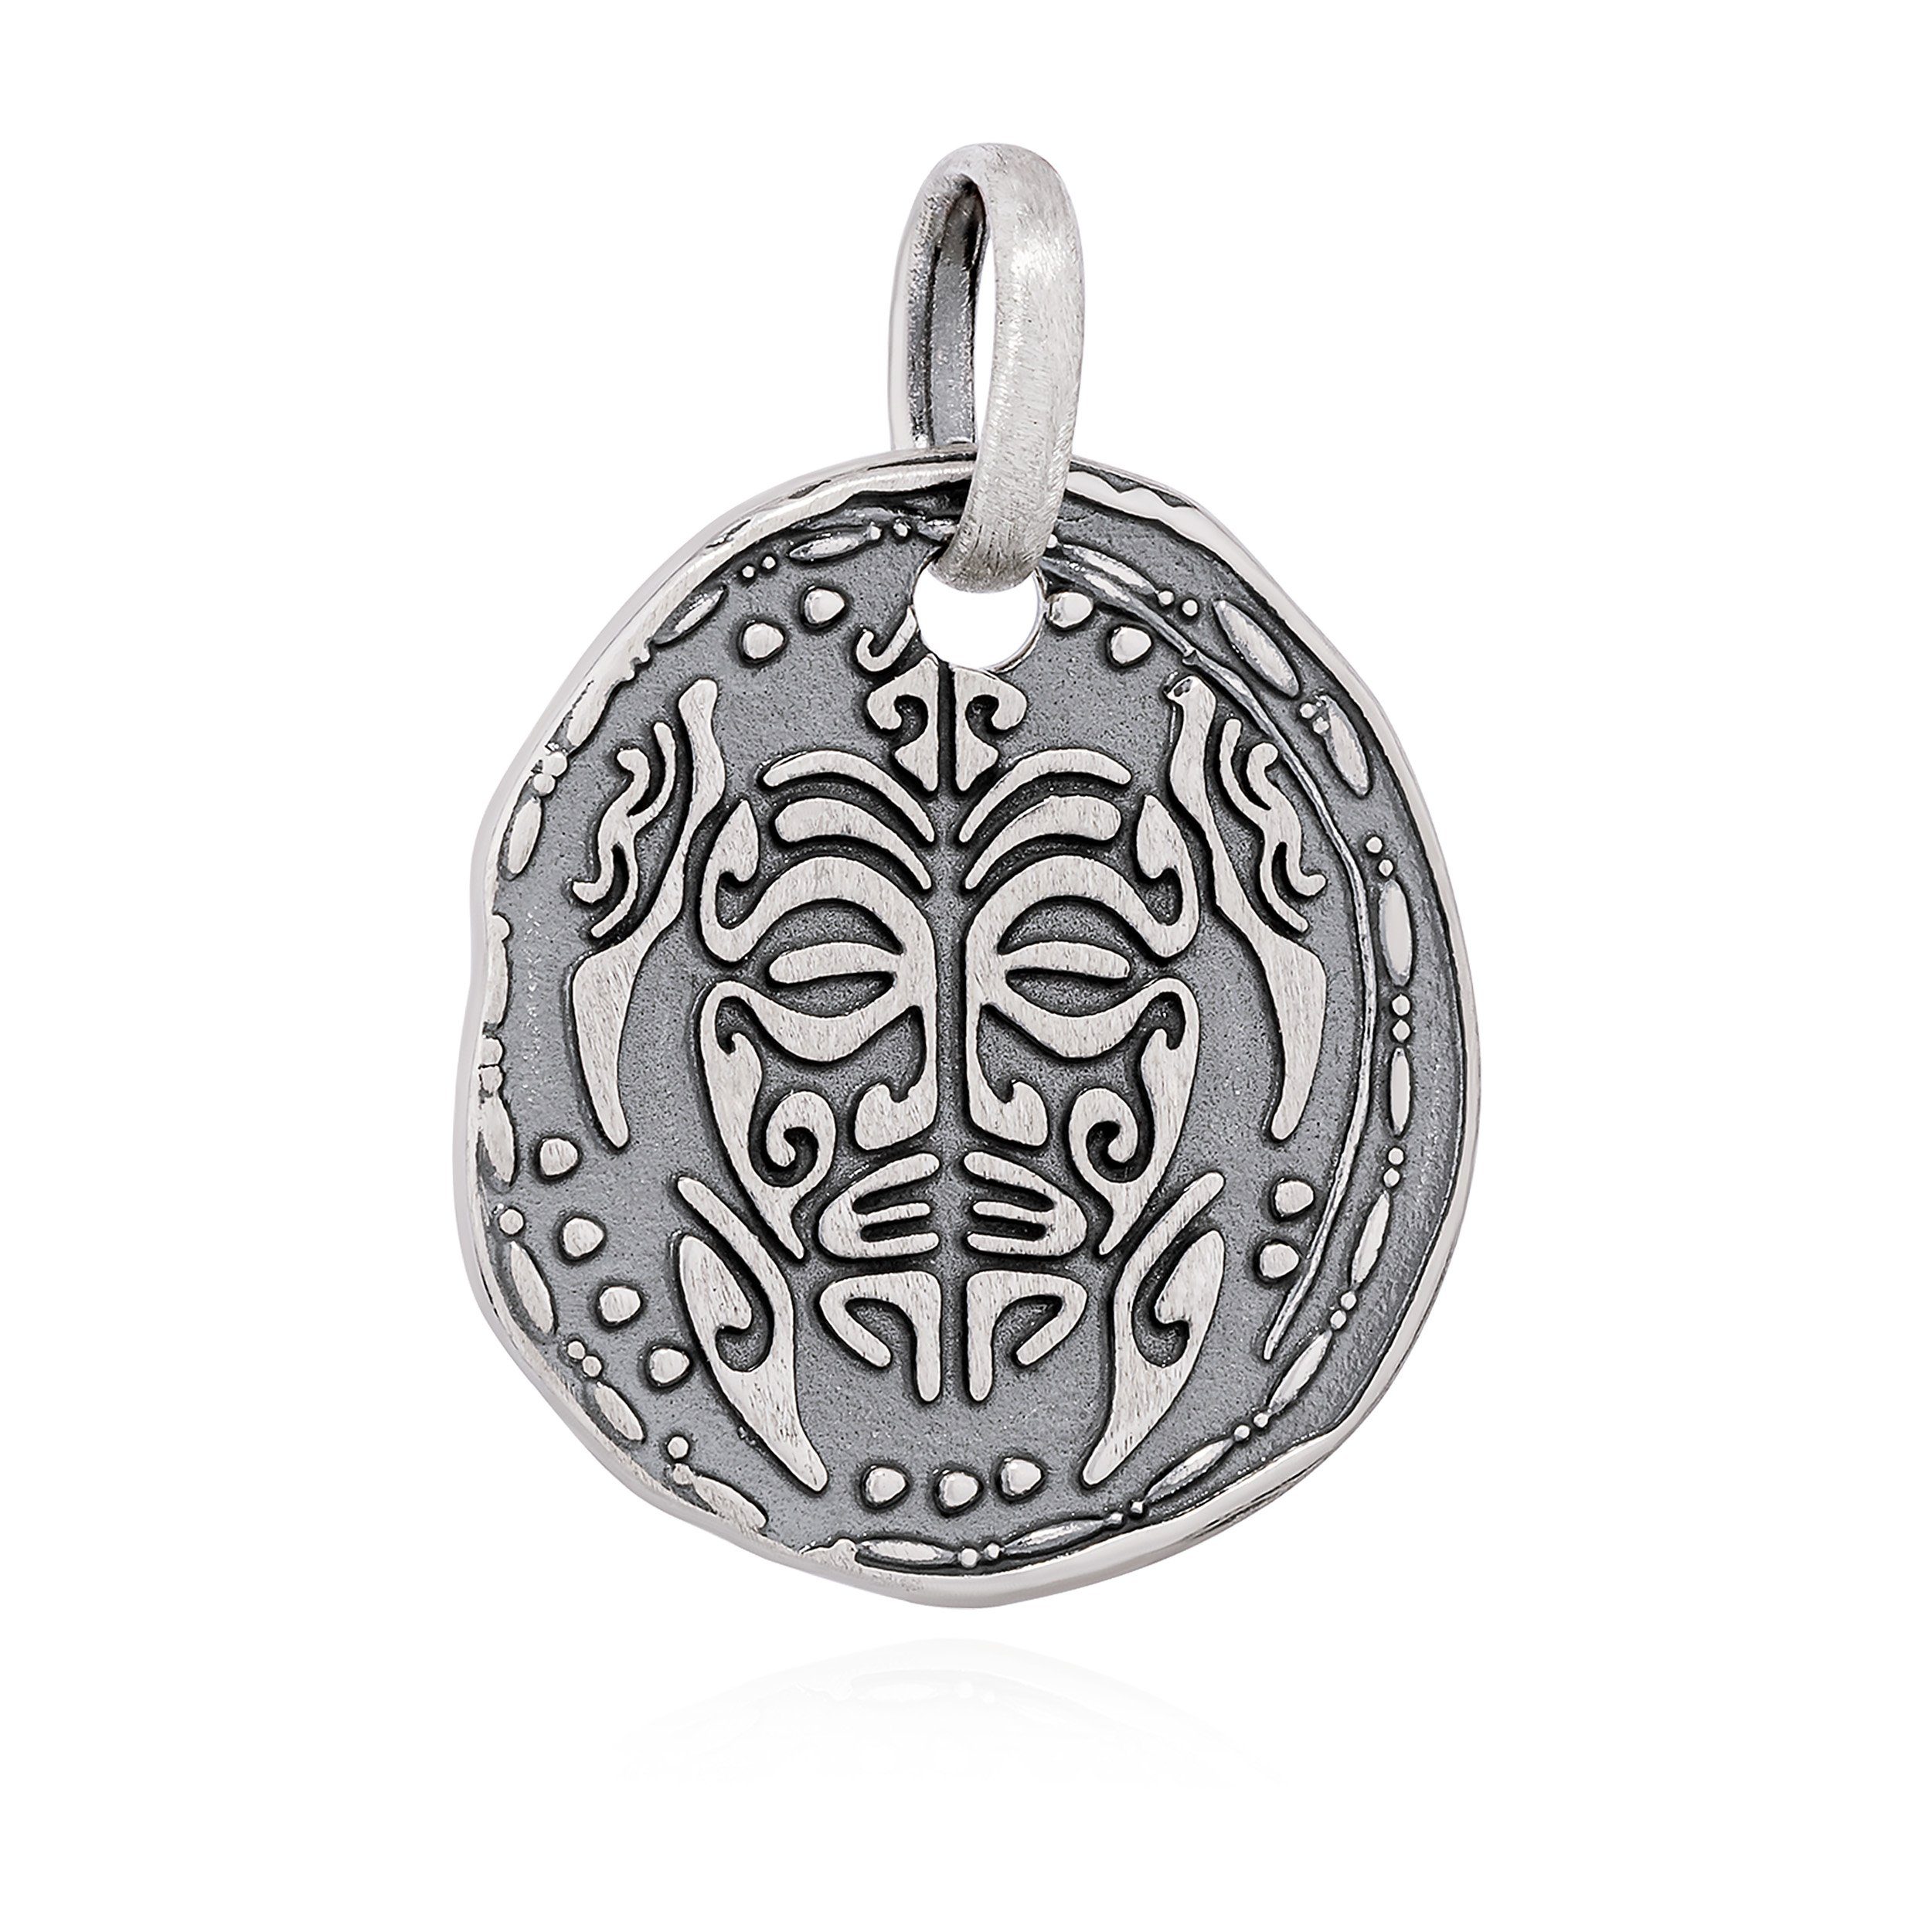 NKlaus Kettenanhänger 23cm Kettenanhänger Schildkröte 925 Sterling Silber Maori Schutzsymbol